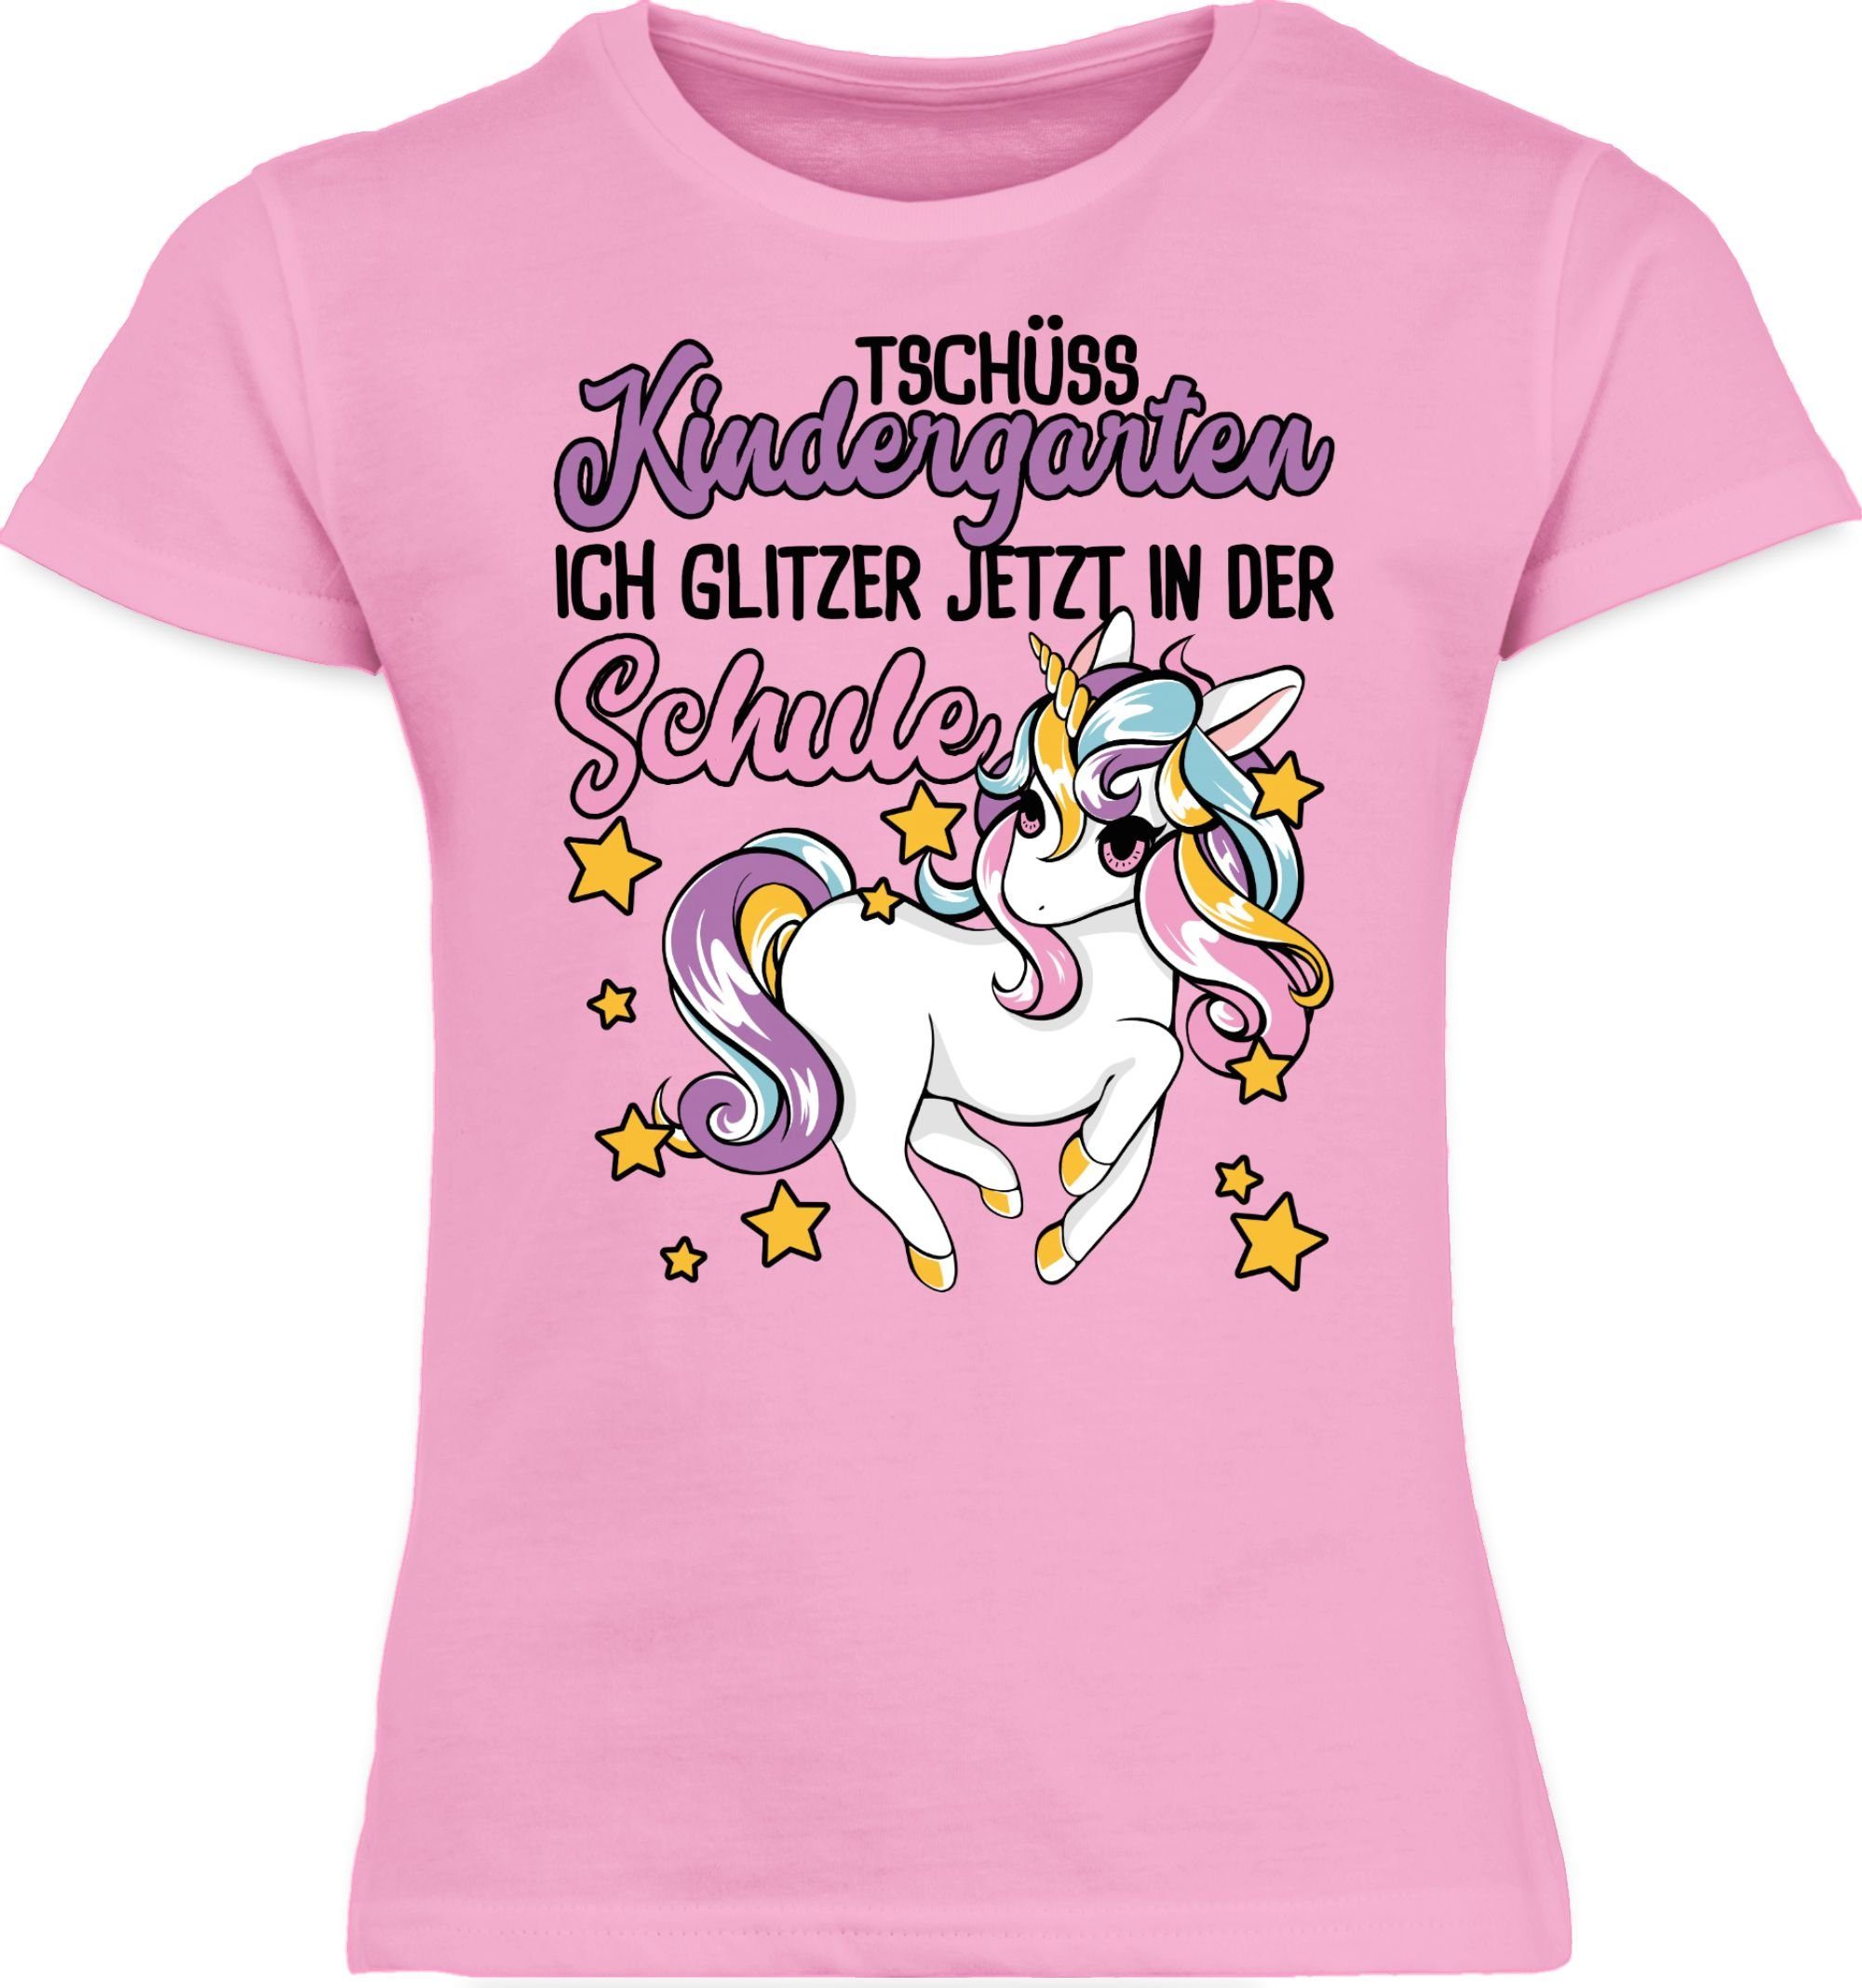 Shirtracer T-Shirt Tschüss Kindergarten Einhorn - Glitzer jetzt in der Schule Einschulung Mädchen 2 Rosa | T-Shirts